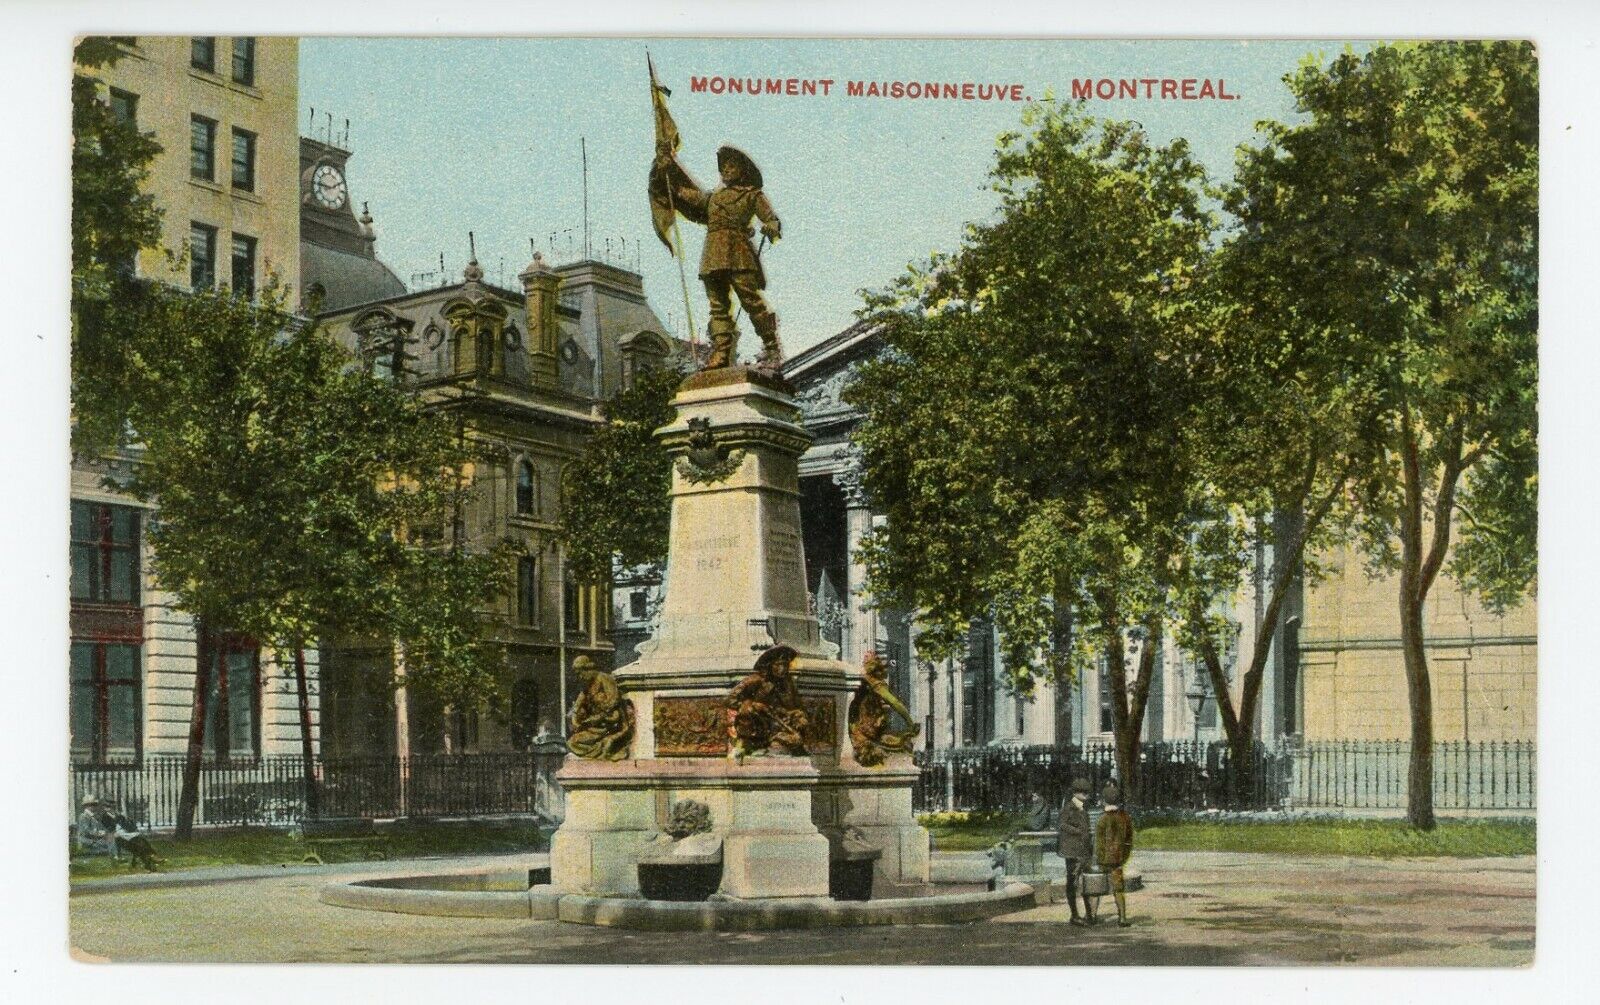 Maisonneuve Monument MONTREAL Quebec Canada 1906-13 Montreal Import Postcard 110